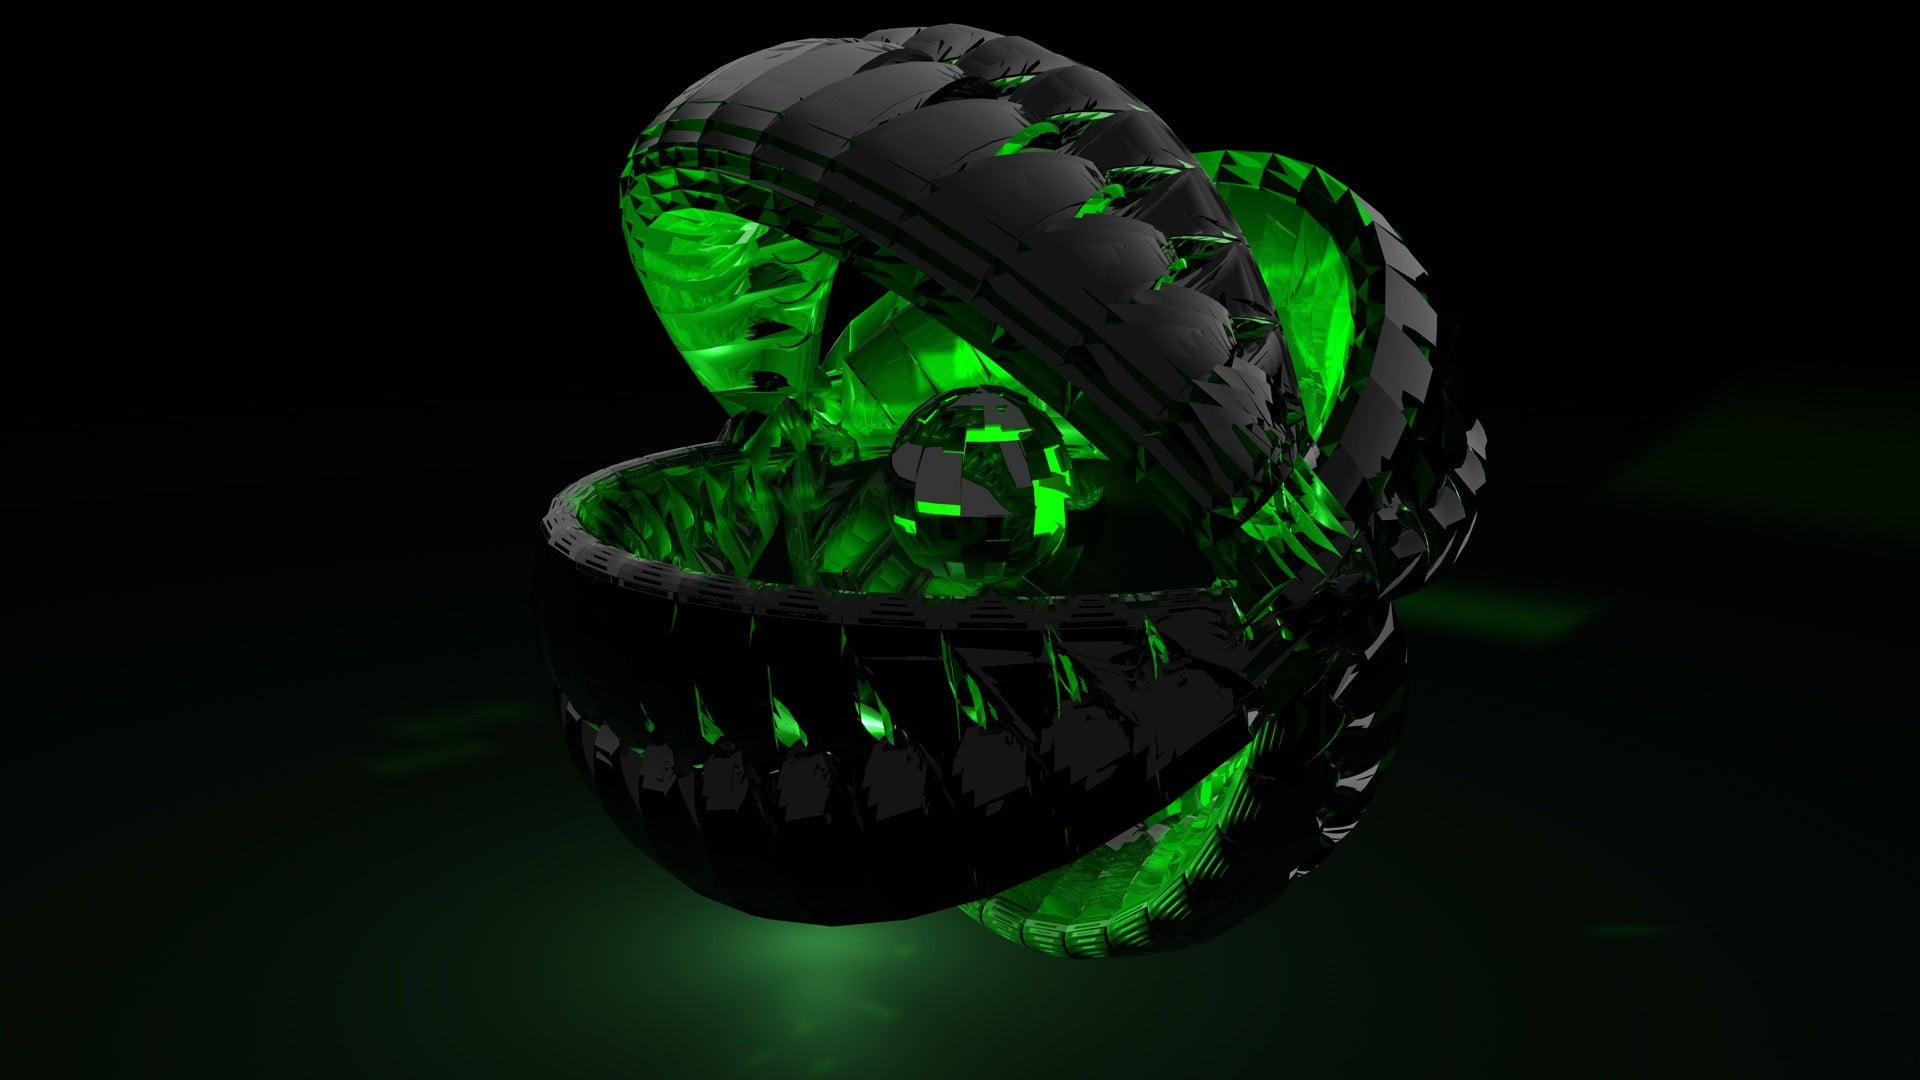 black and green lighted decor, digital art, green color, helmet